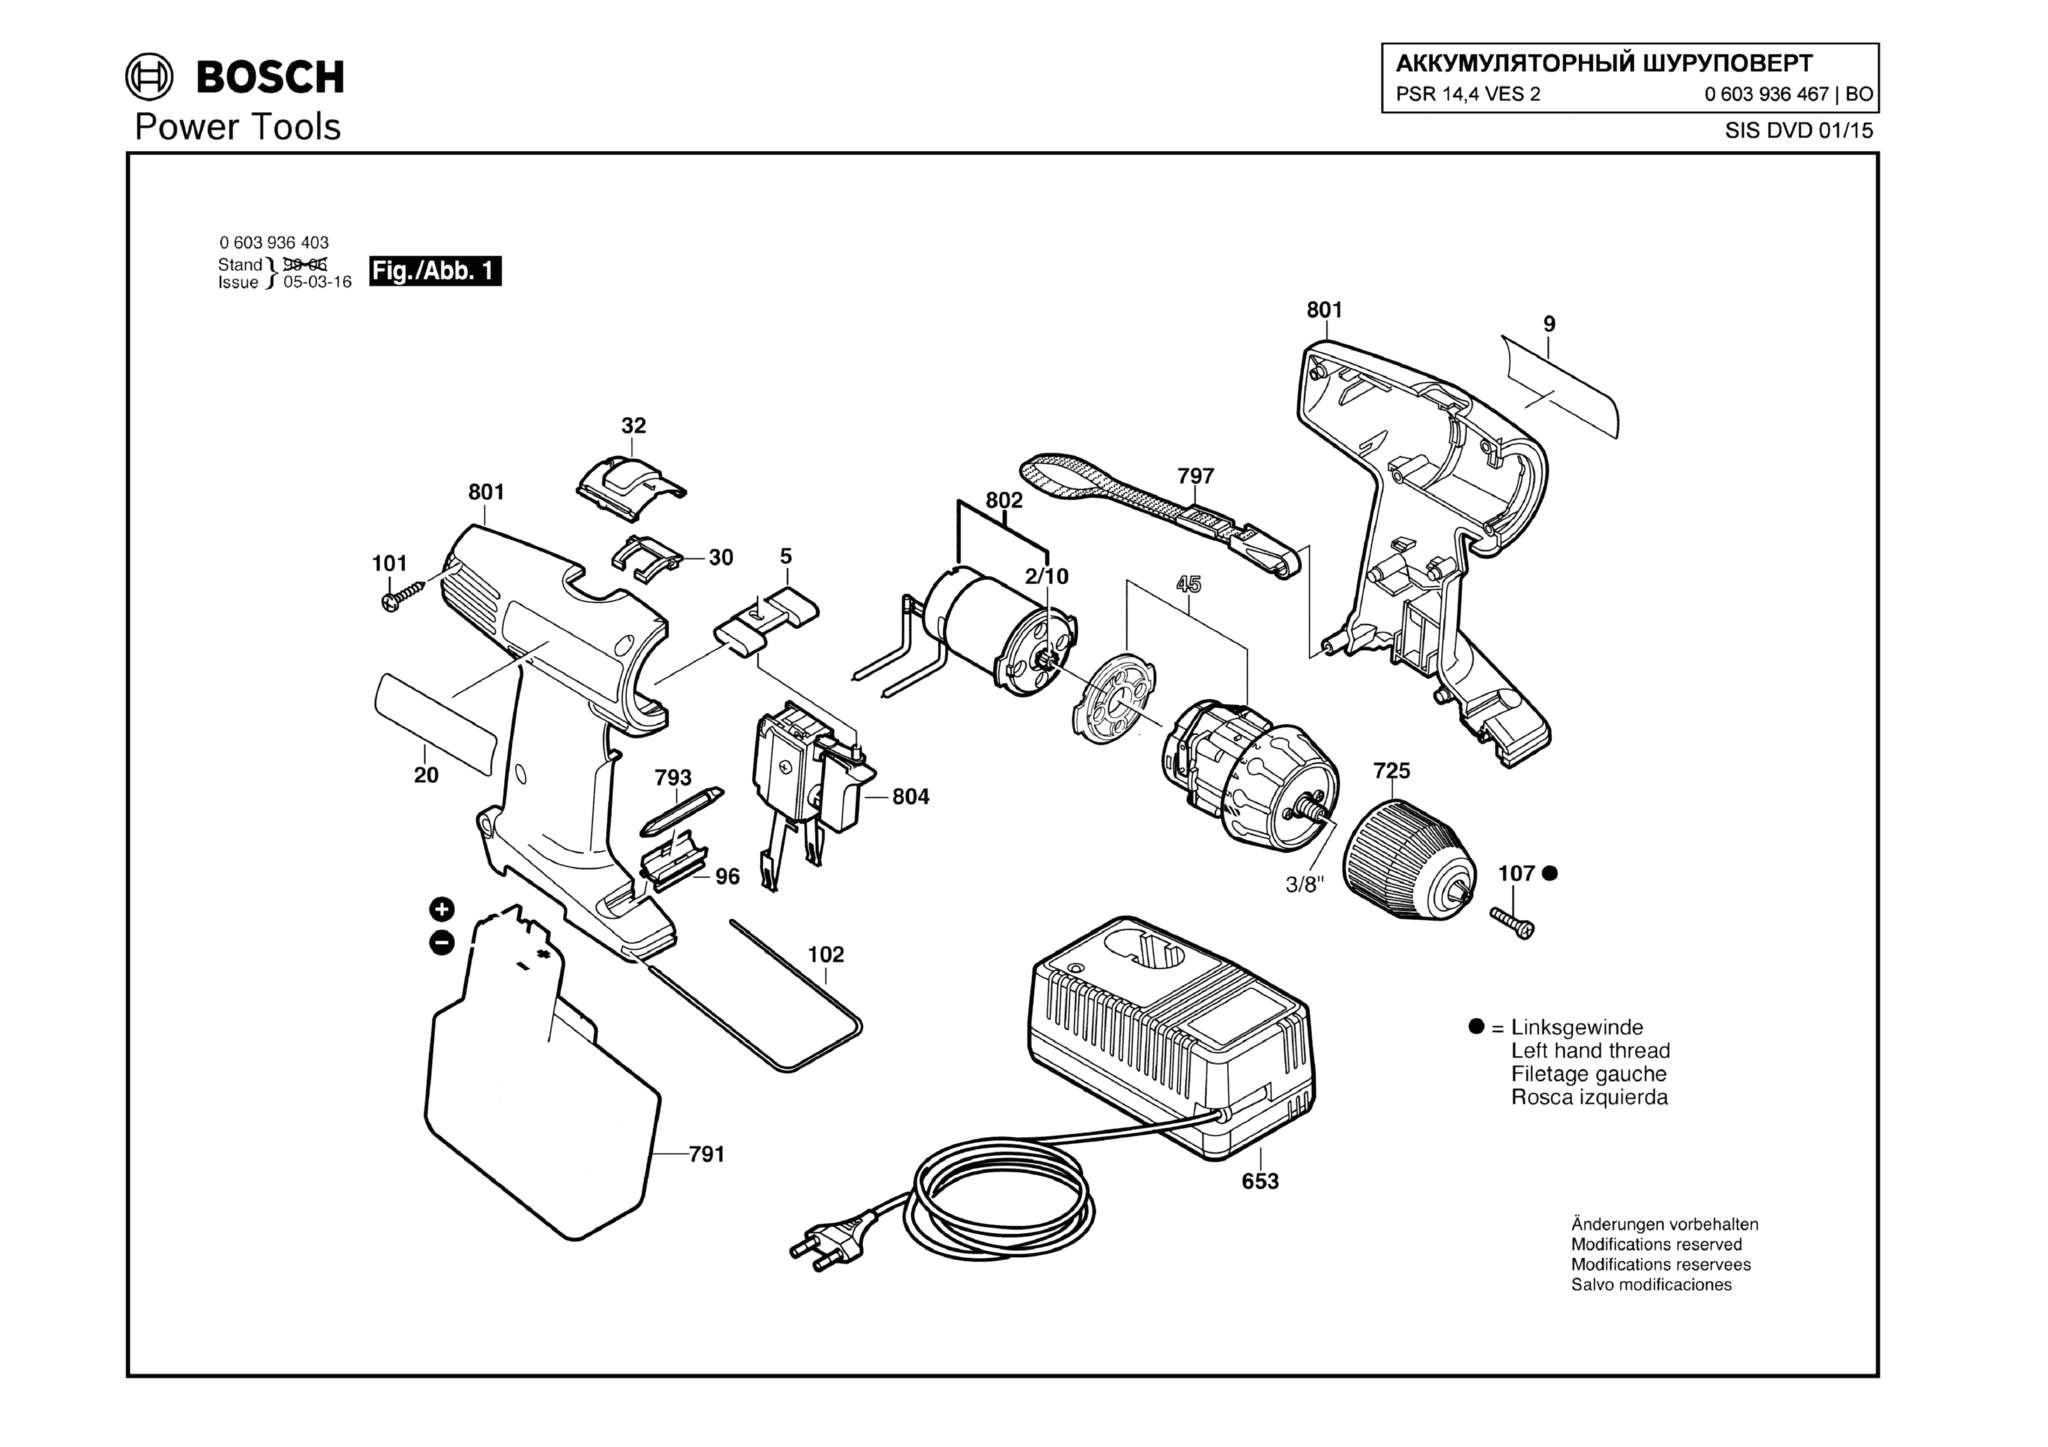 Запчасти, схема и деталировка Bosch PSR 14,4 VES 2 (ТИП 0603936467)